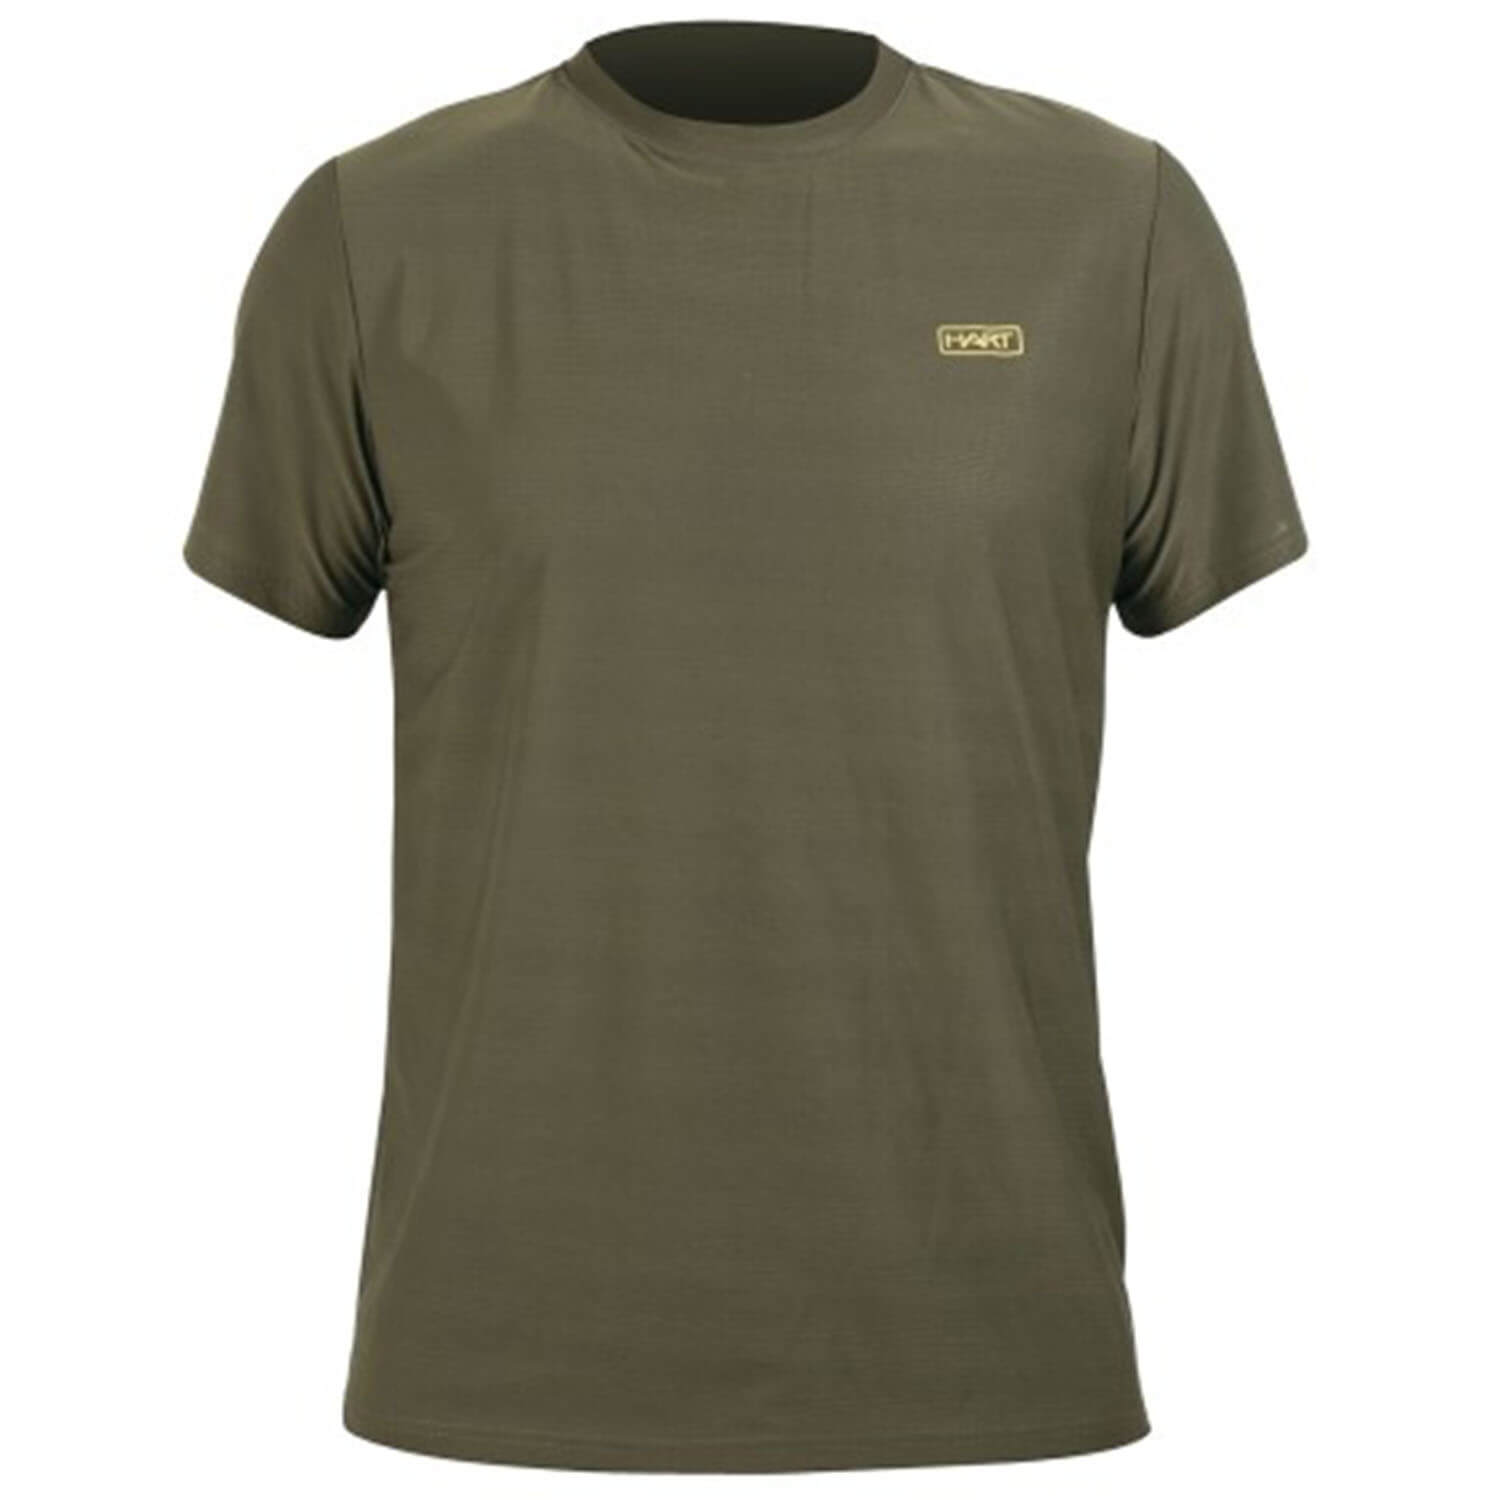  Hart Ural-TS T-shirt (green) -  Roe Buck Hunting